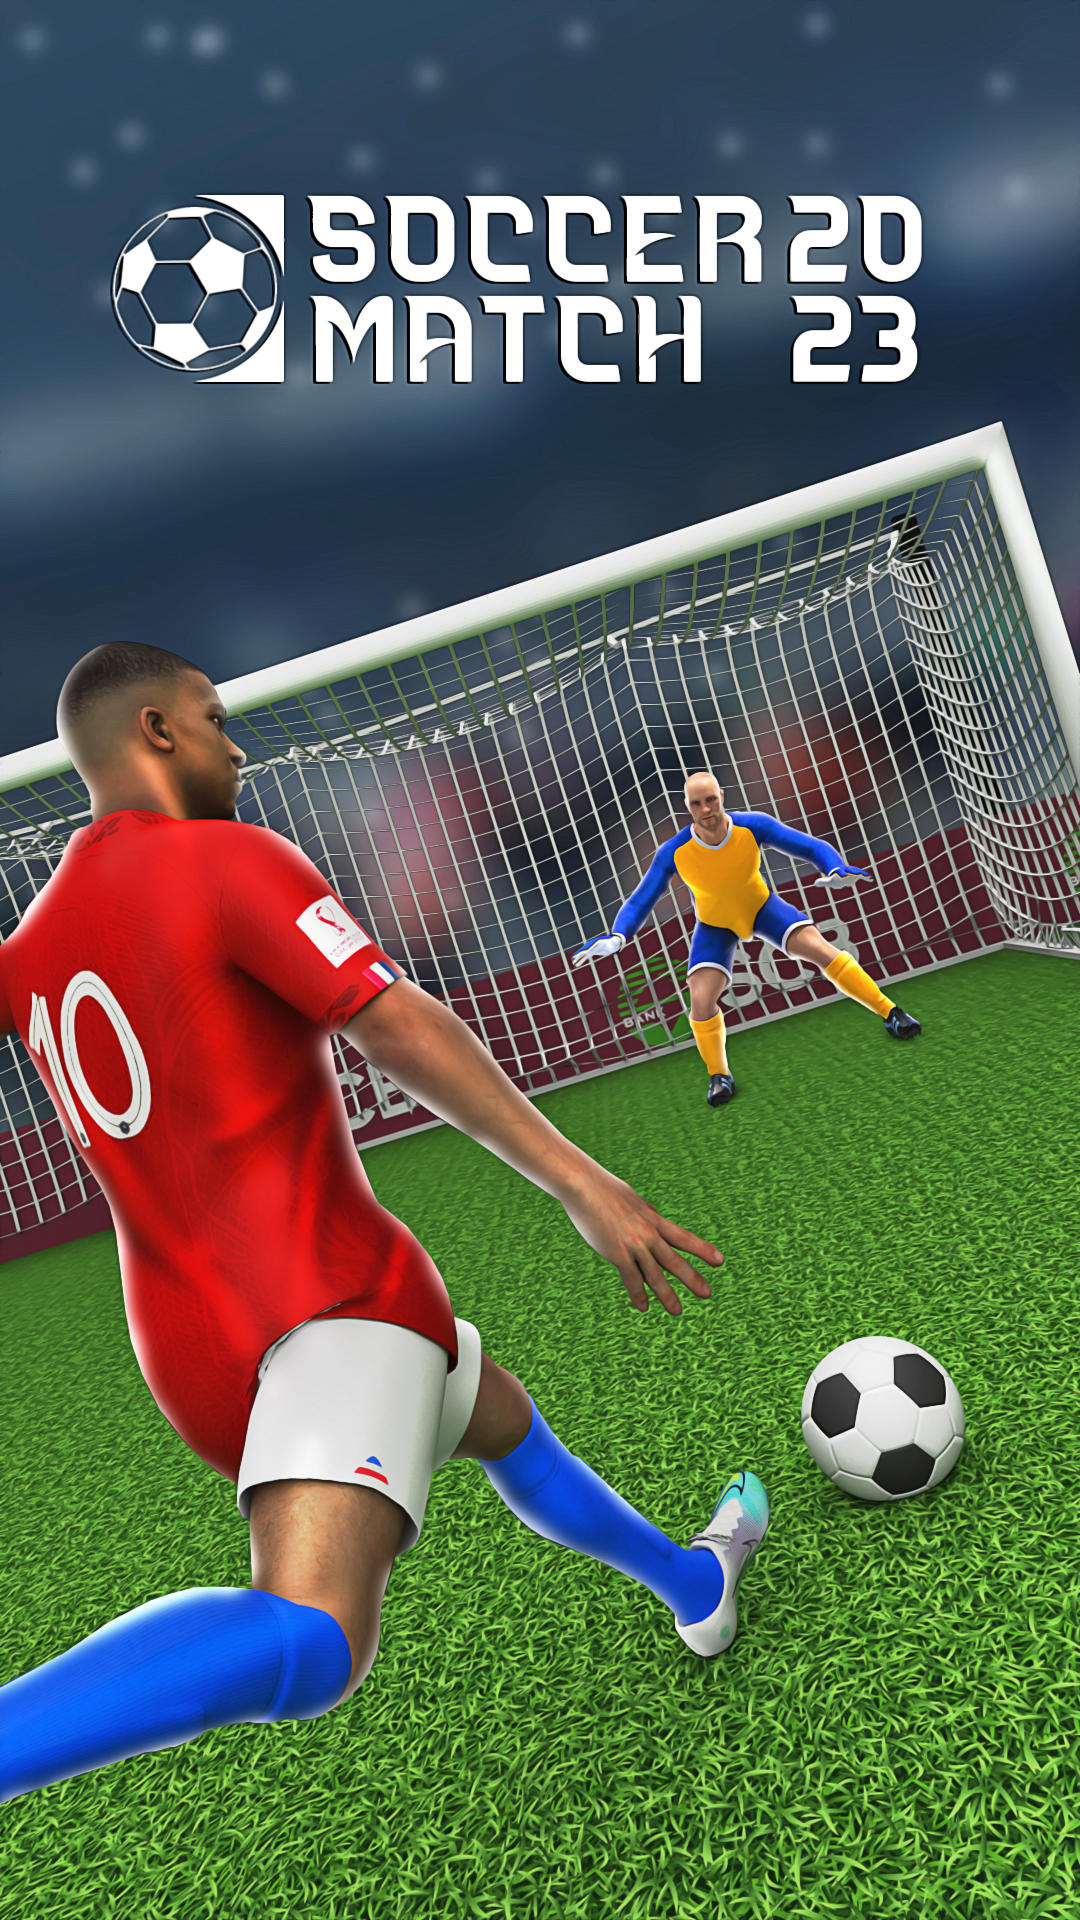 Liga Brasileira Jogo Futebol android iOS apk download for free-TapTap